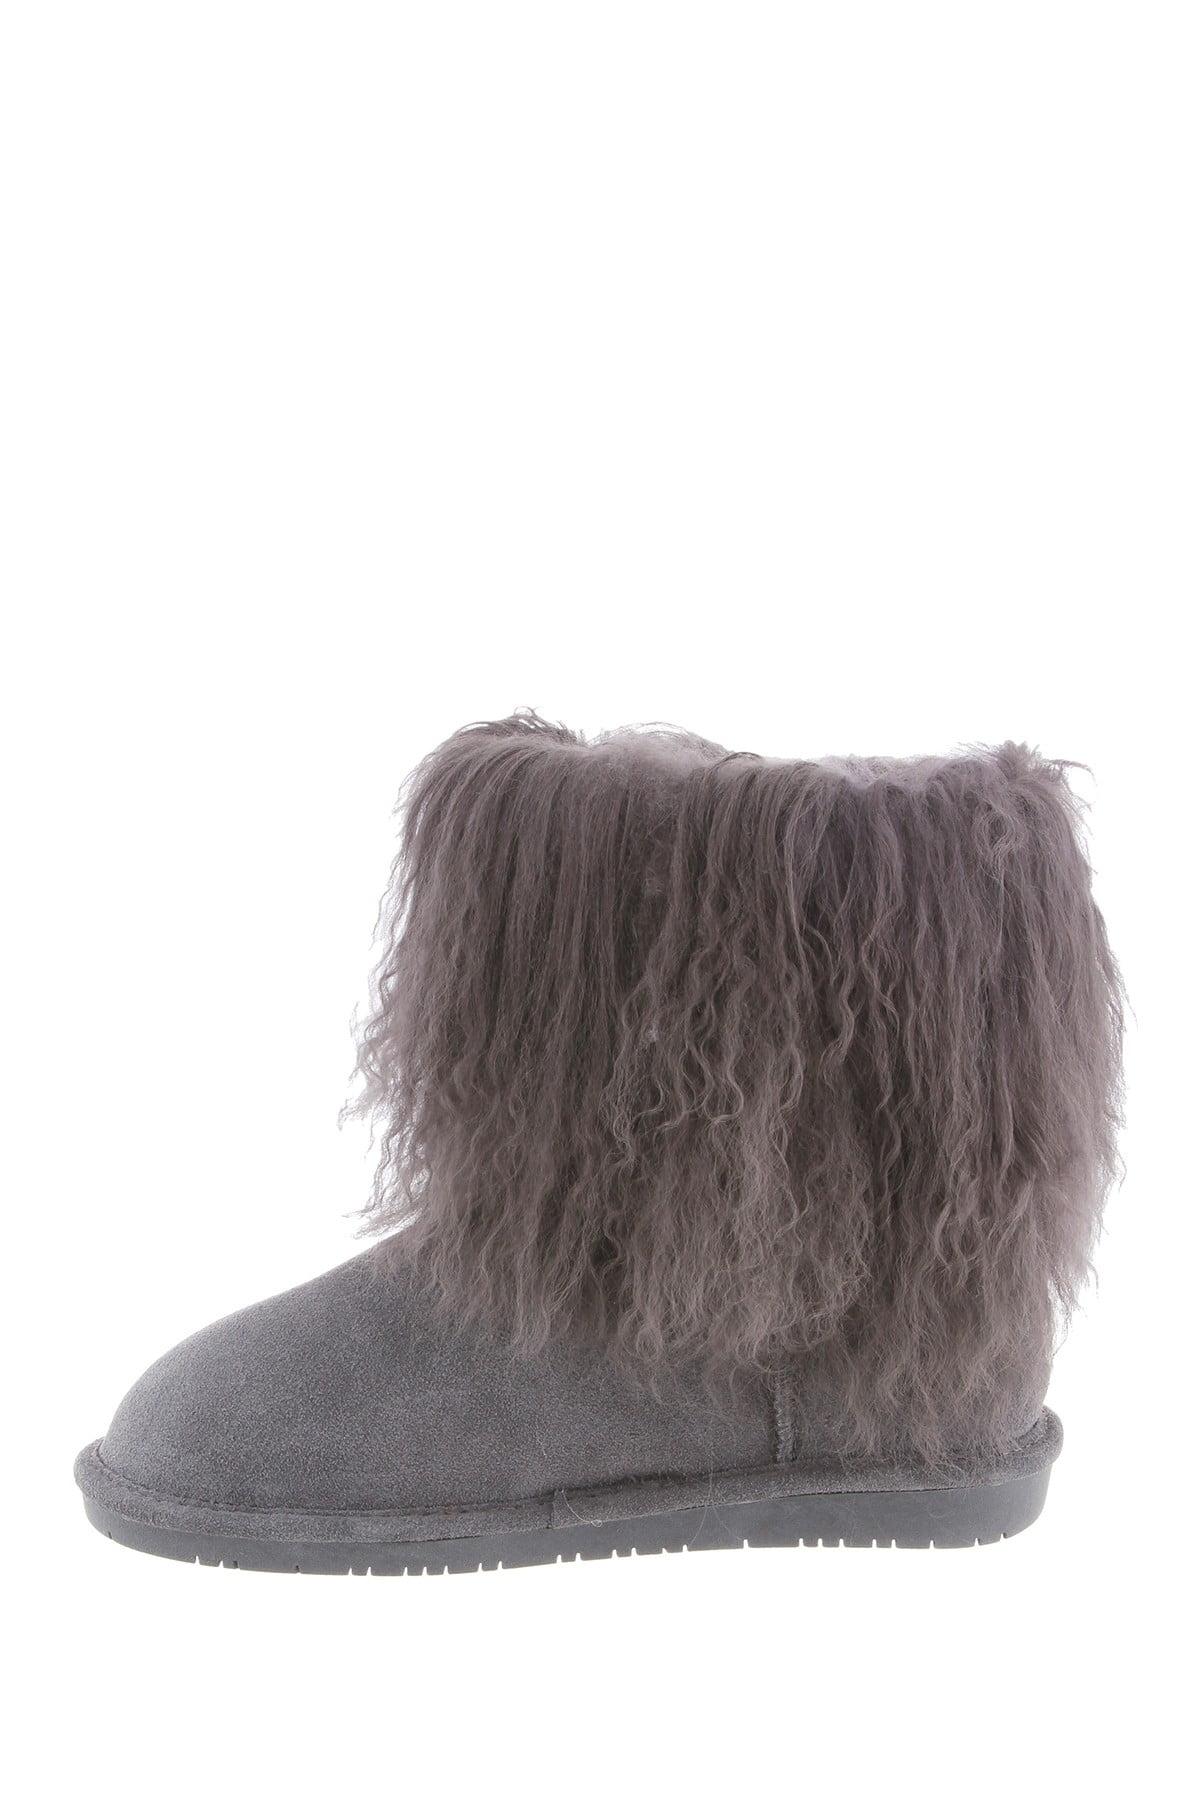 bearpaw boo solids furry boot